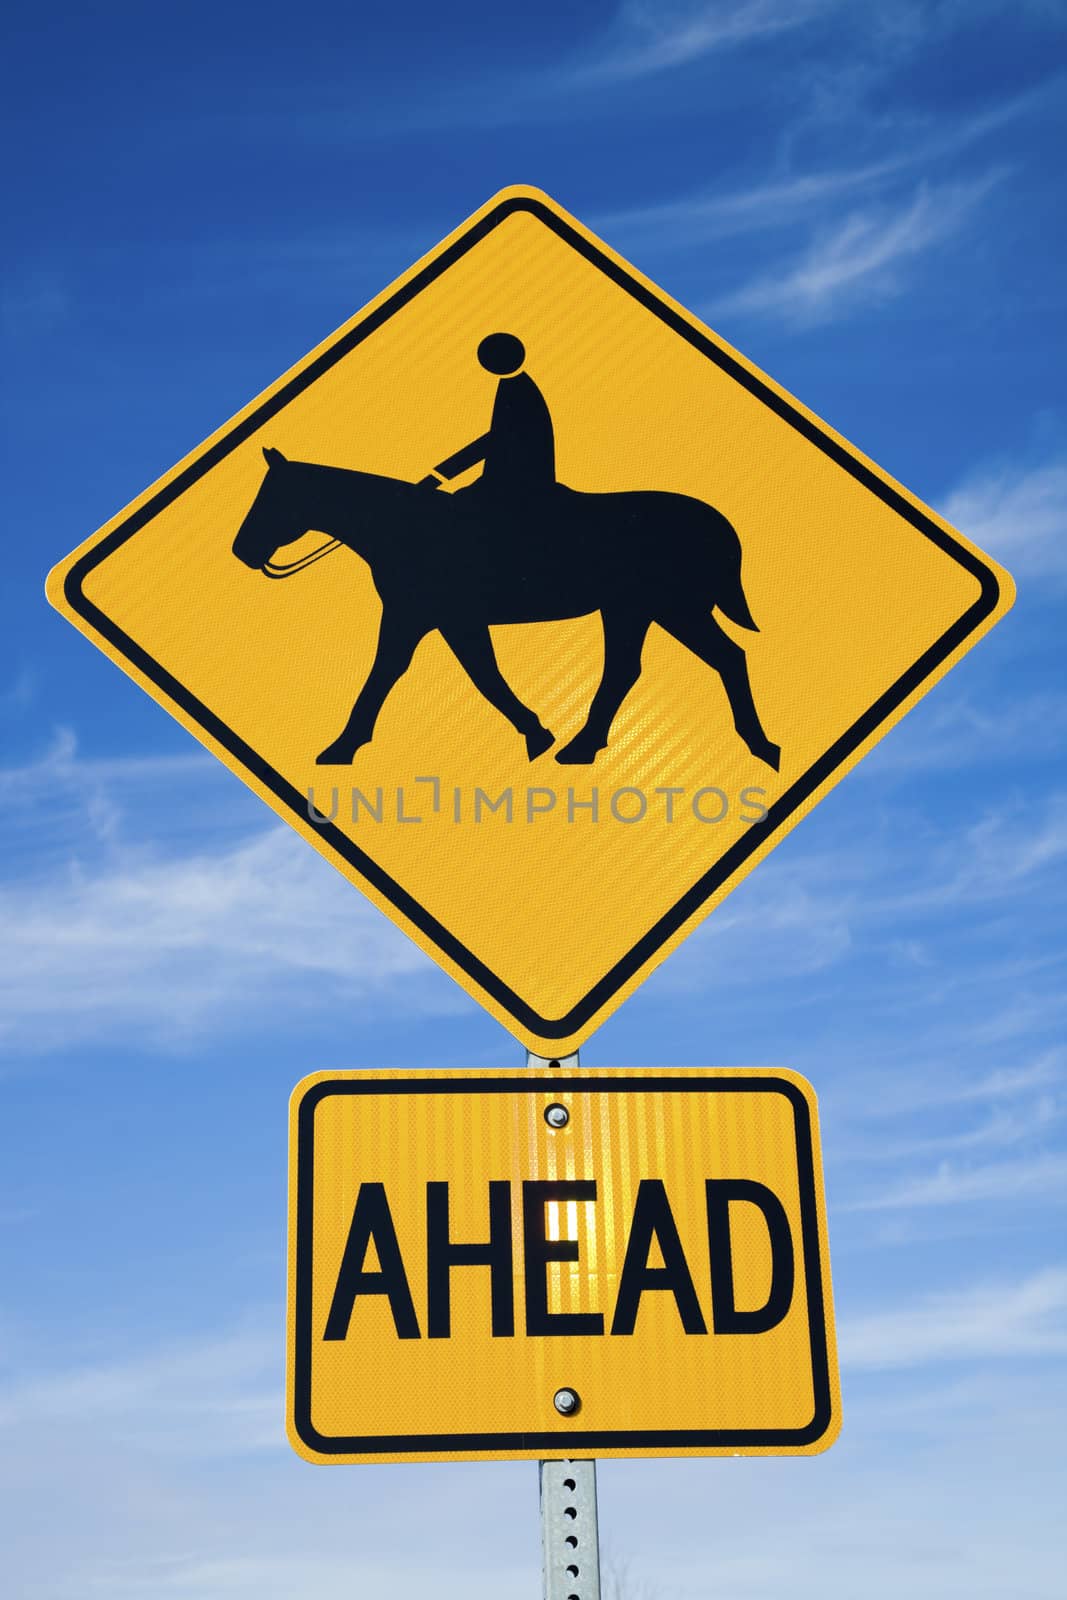 Horseback Riding sign against blue sky.